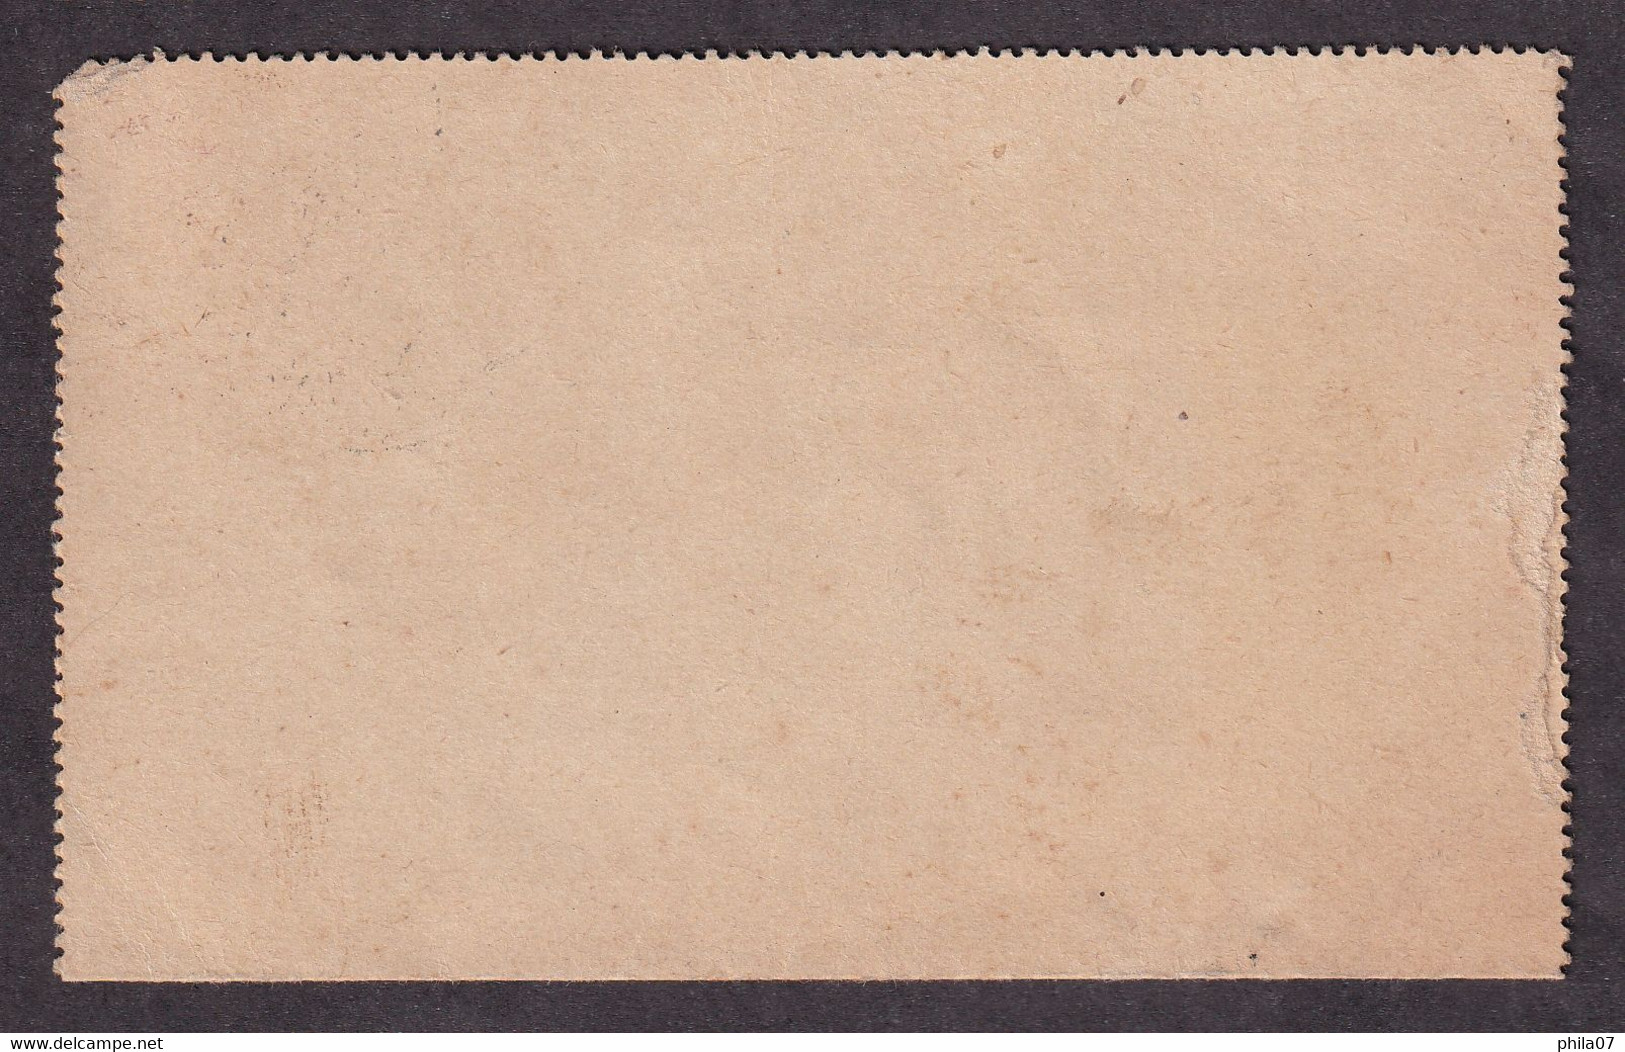 Austria/Croatia - Closed Stationery Sent From Skradin To Trogir Cancelled By M.T.P.O. OE LLOYD BRIONI Postmark 03.10.191 - Briefe U. Dokumente